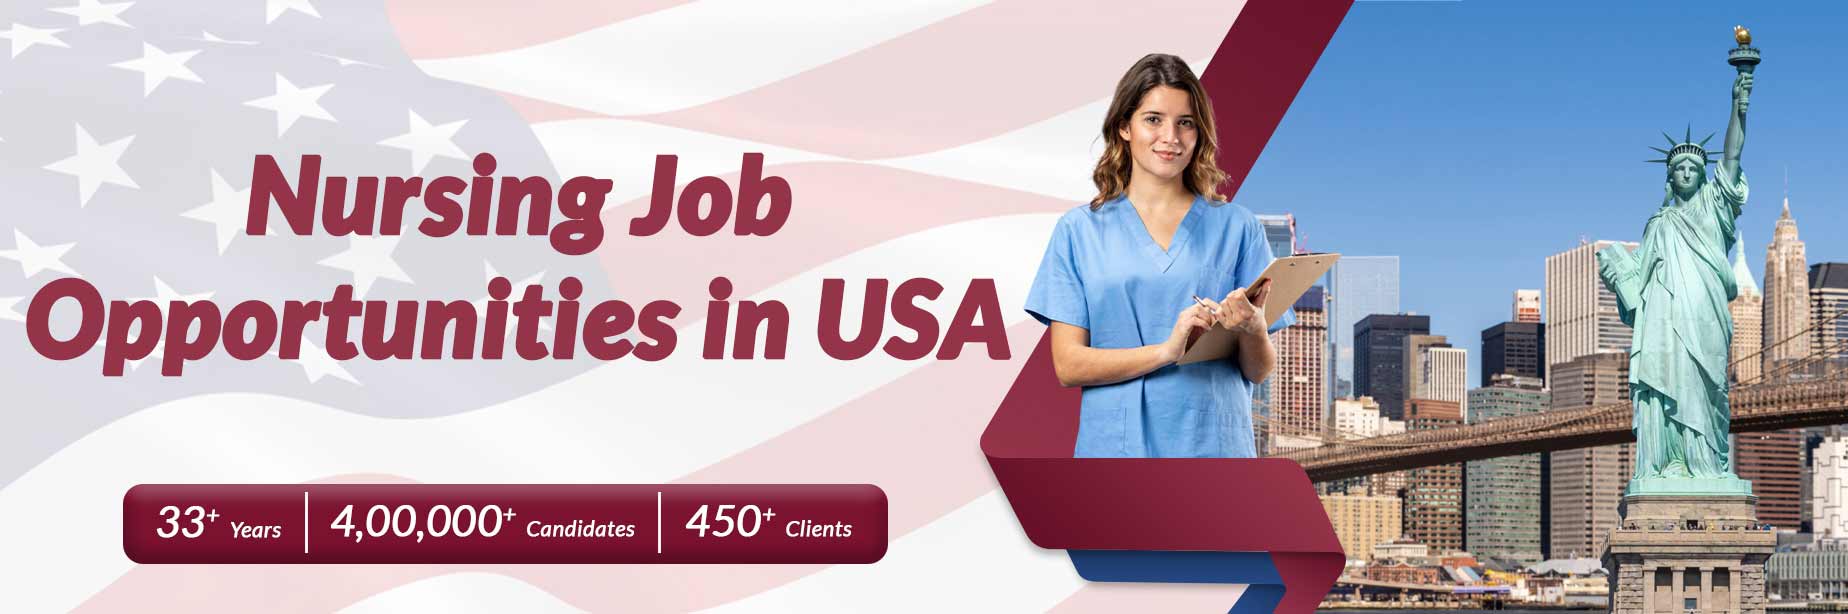 Nursing Job Opportunities in USA